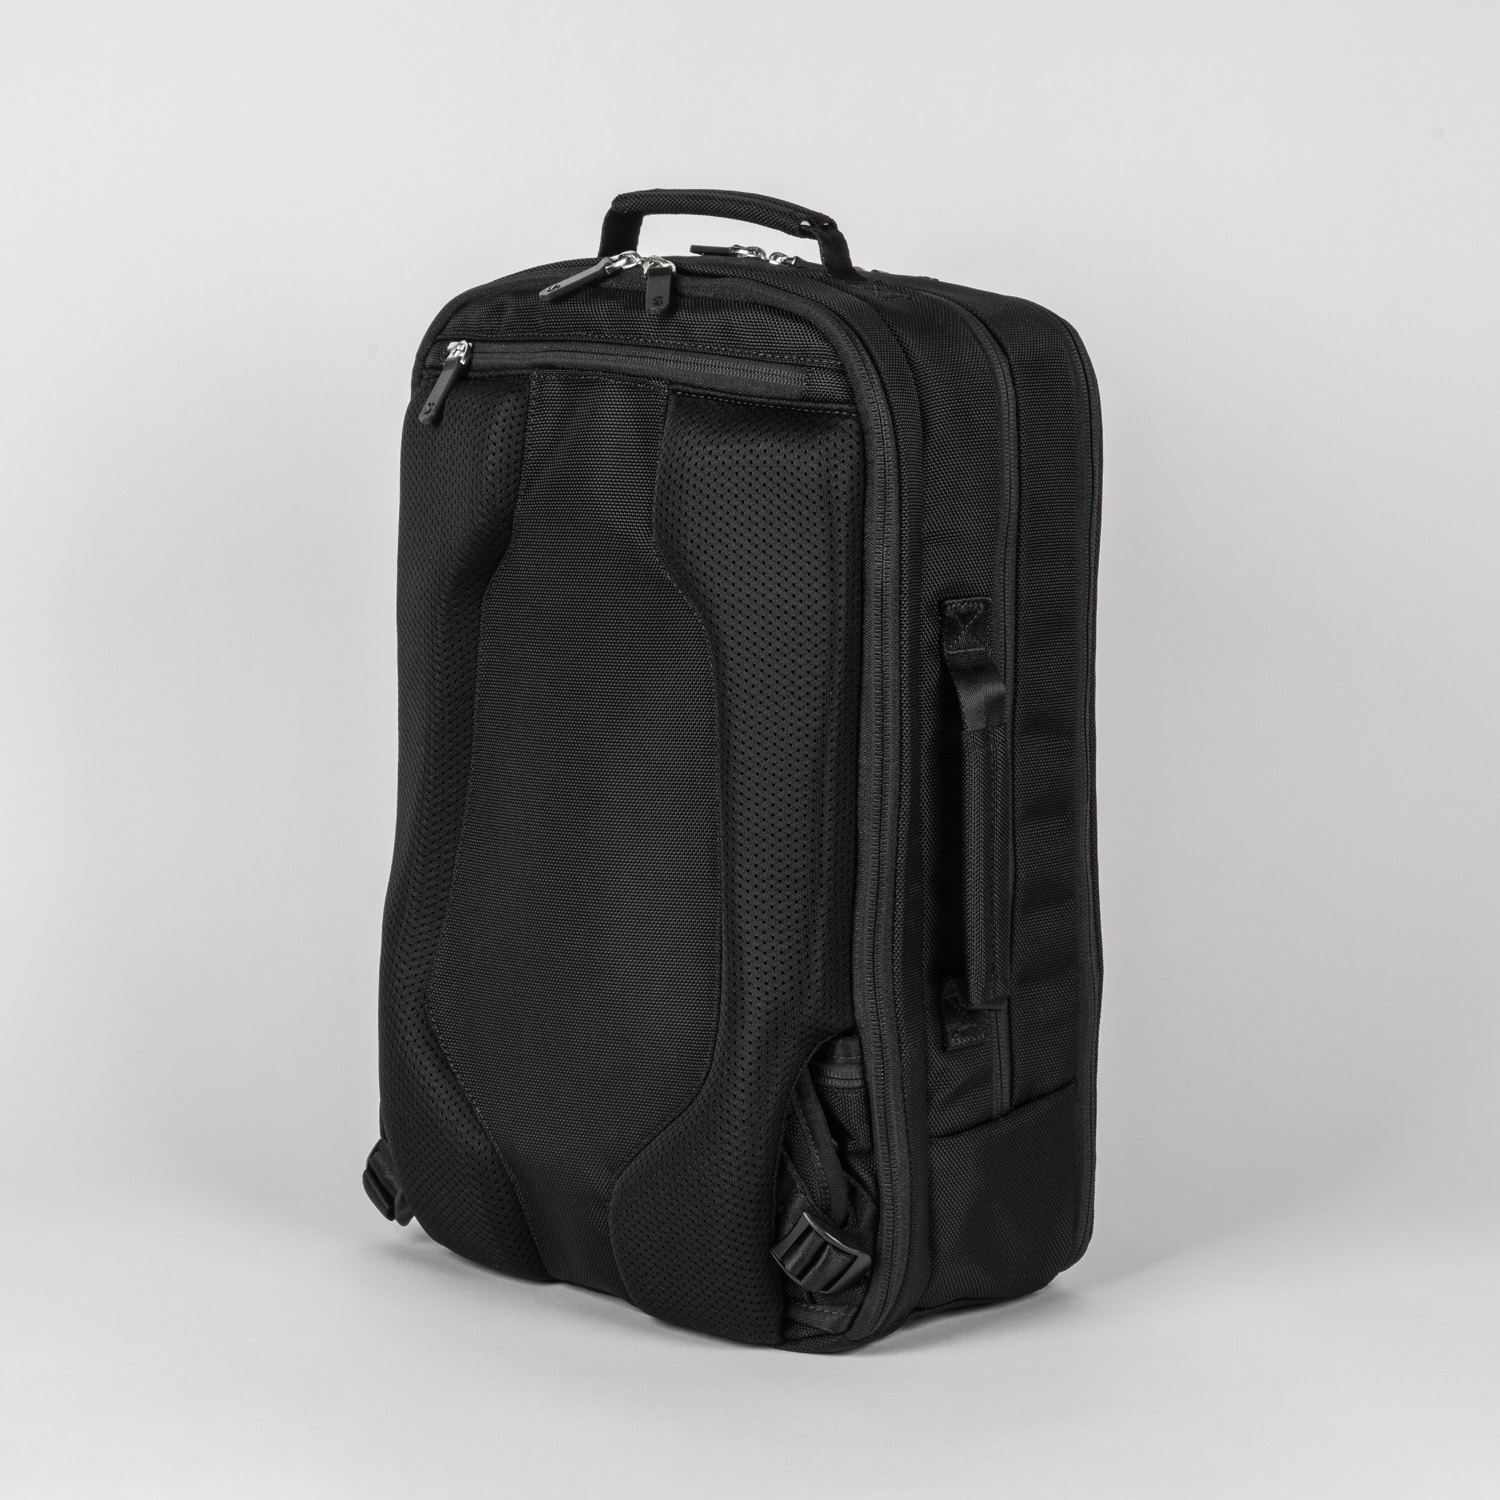 Technical backpack design